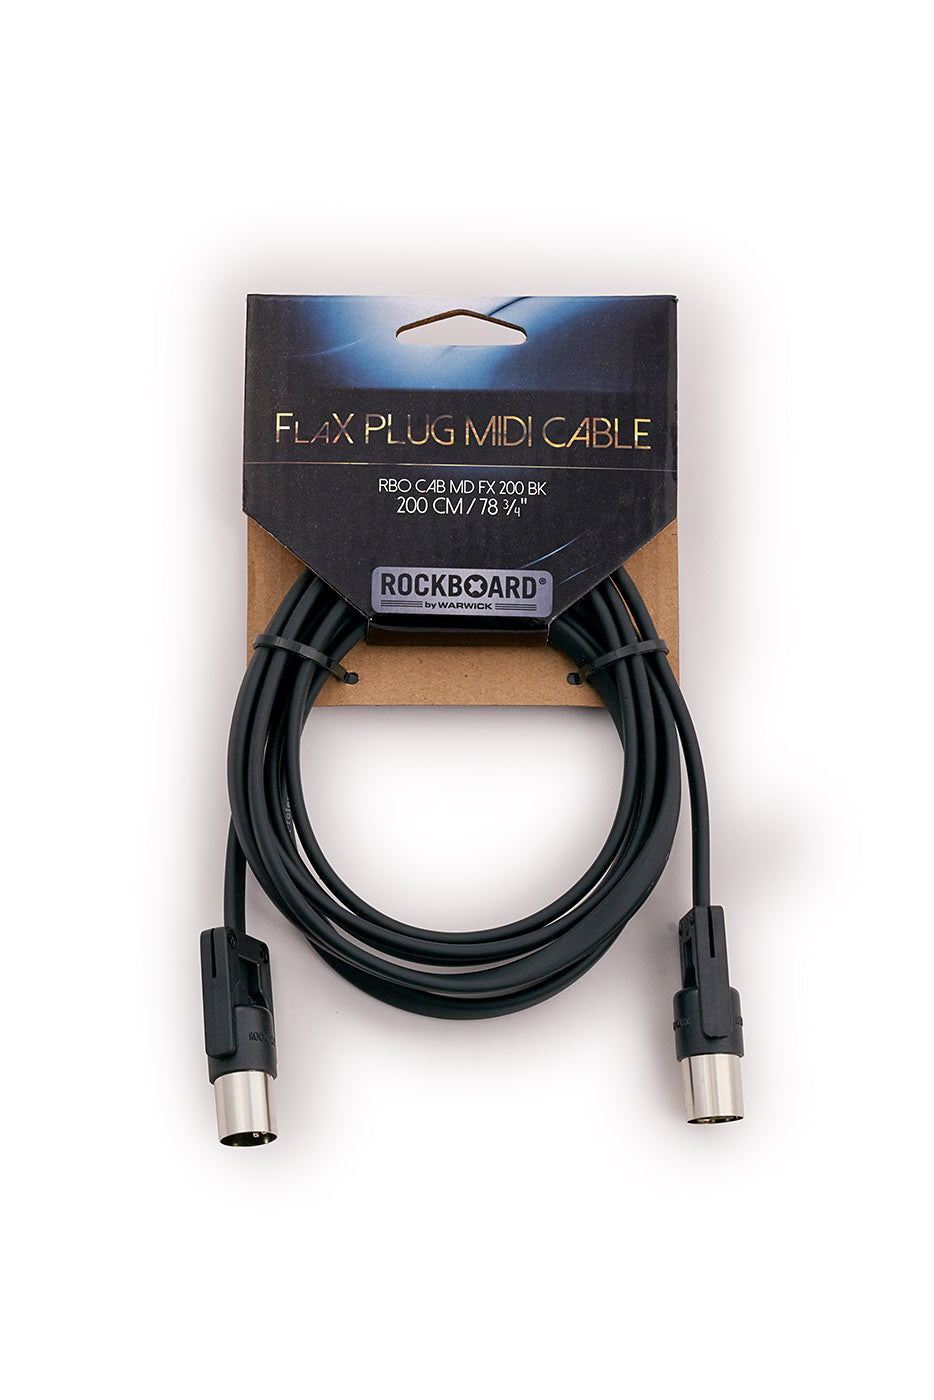 RockBoard FlaX Plug MIDI Cable, 200 cm / 78 3/4